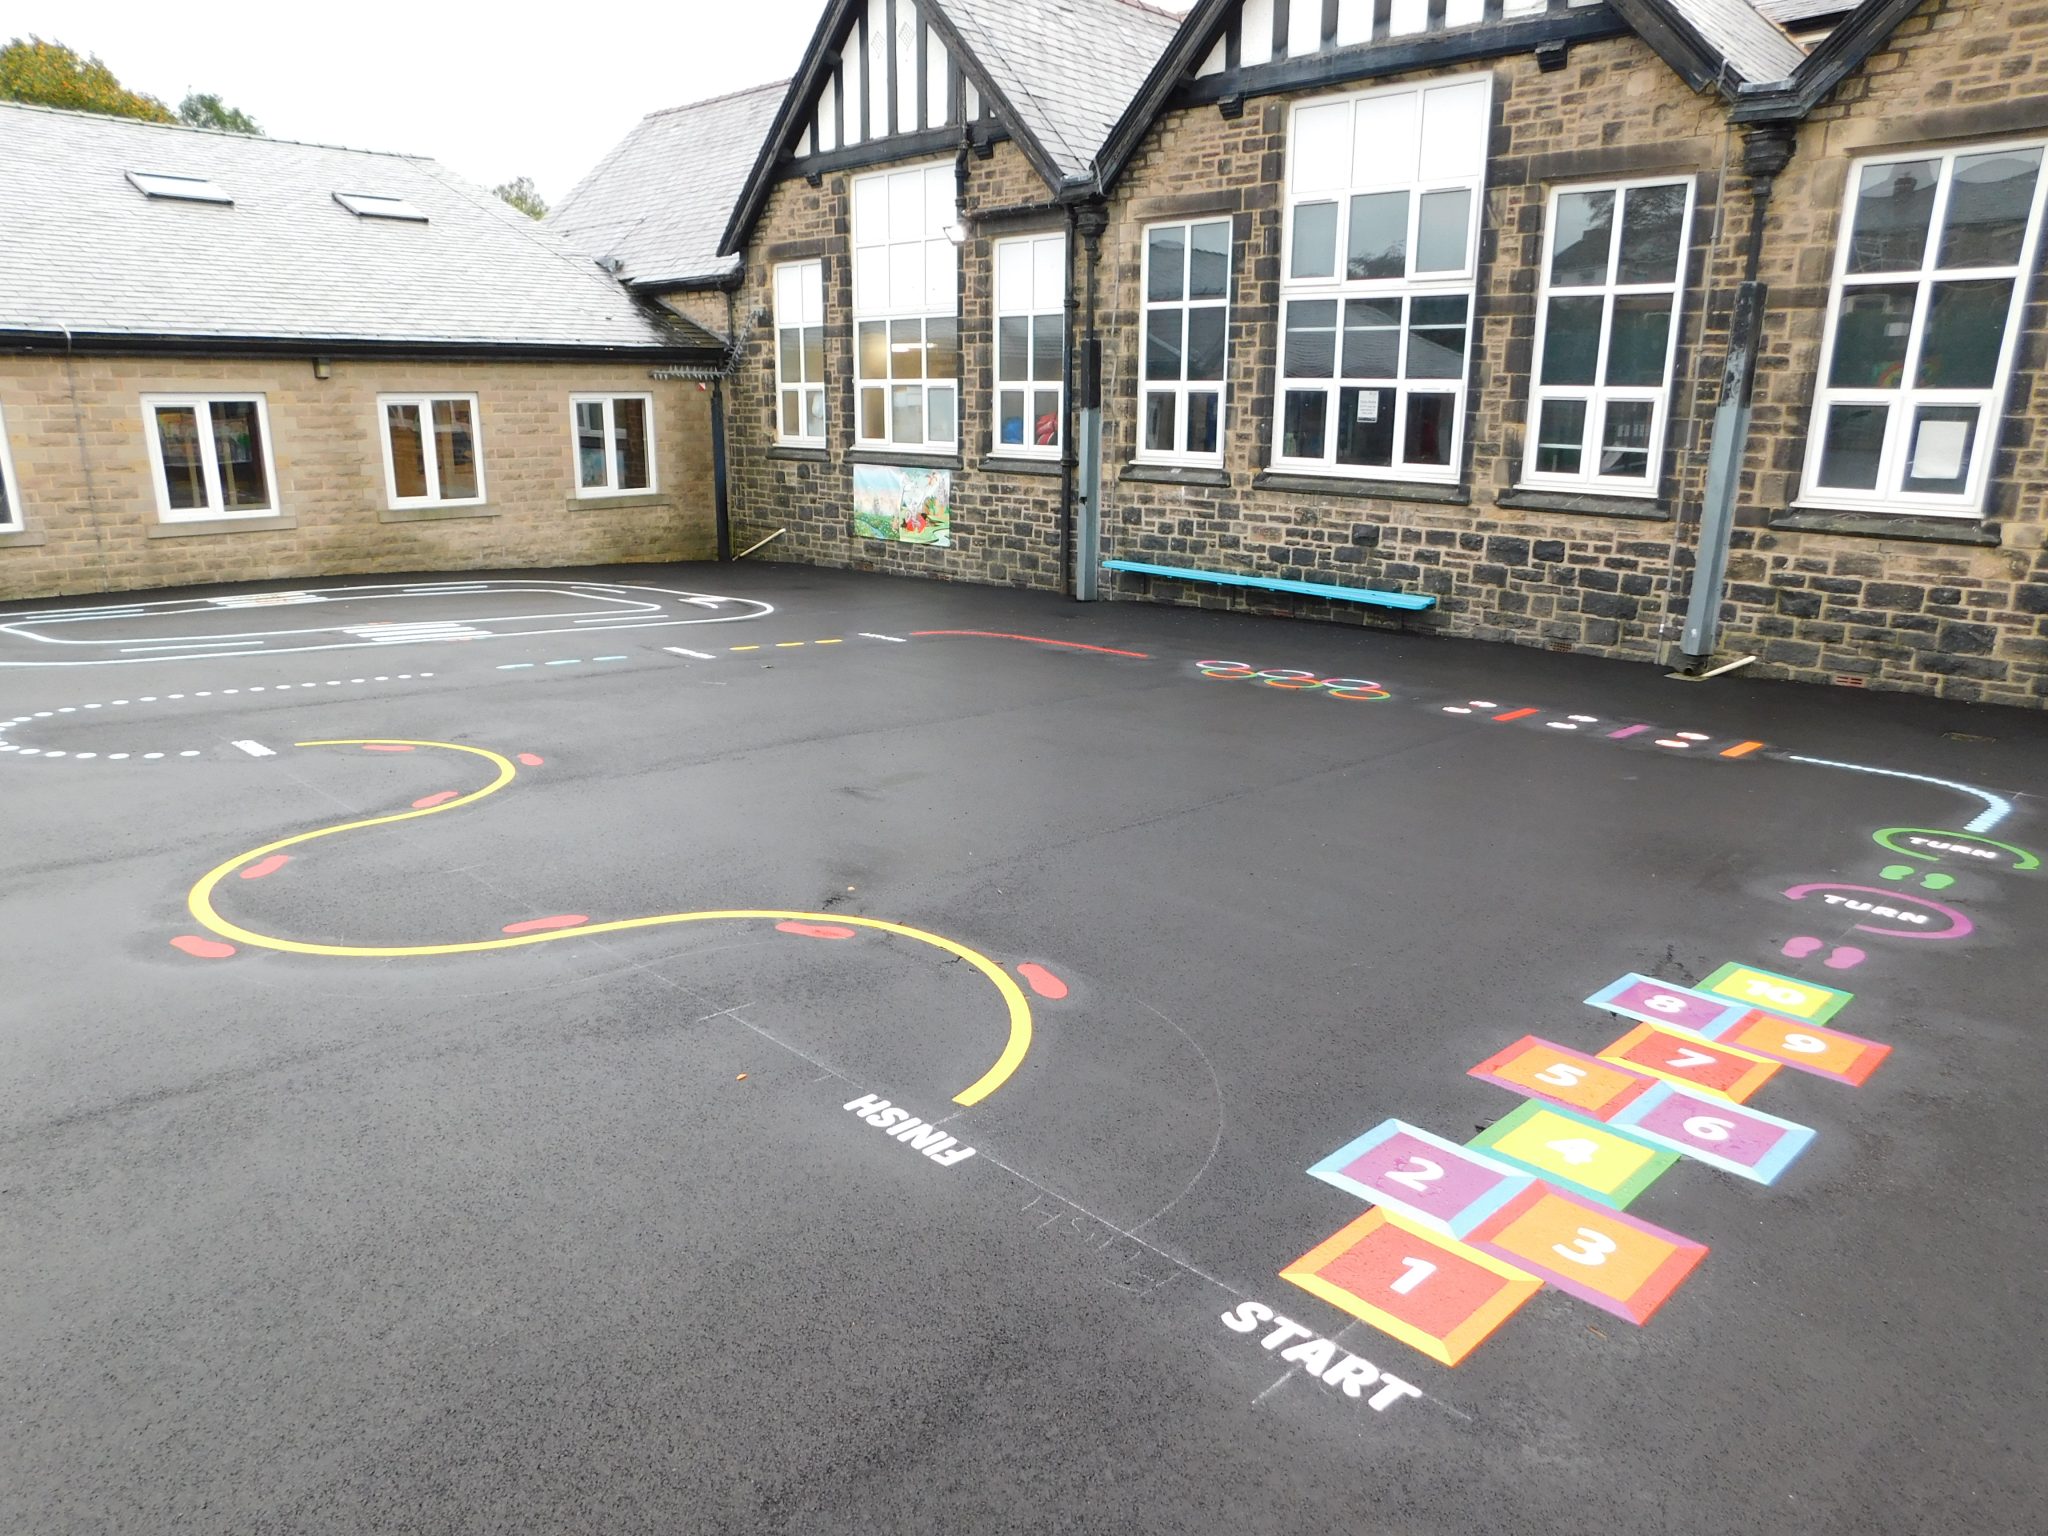 Modern playground ideas to keep primary school pupils engaged